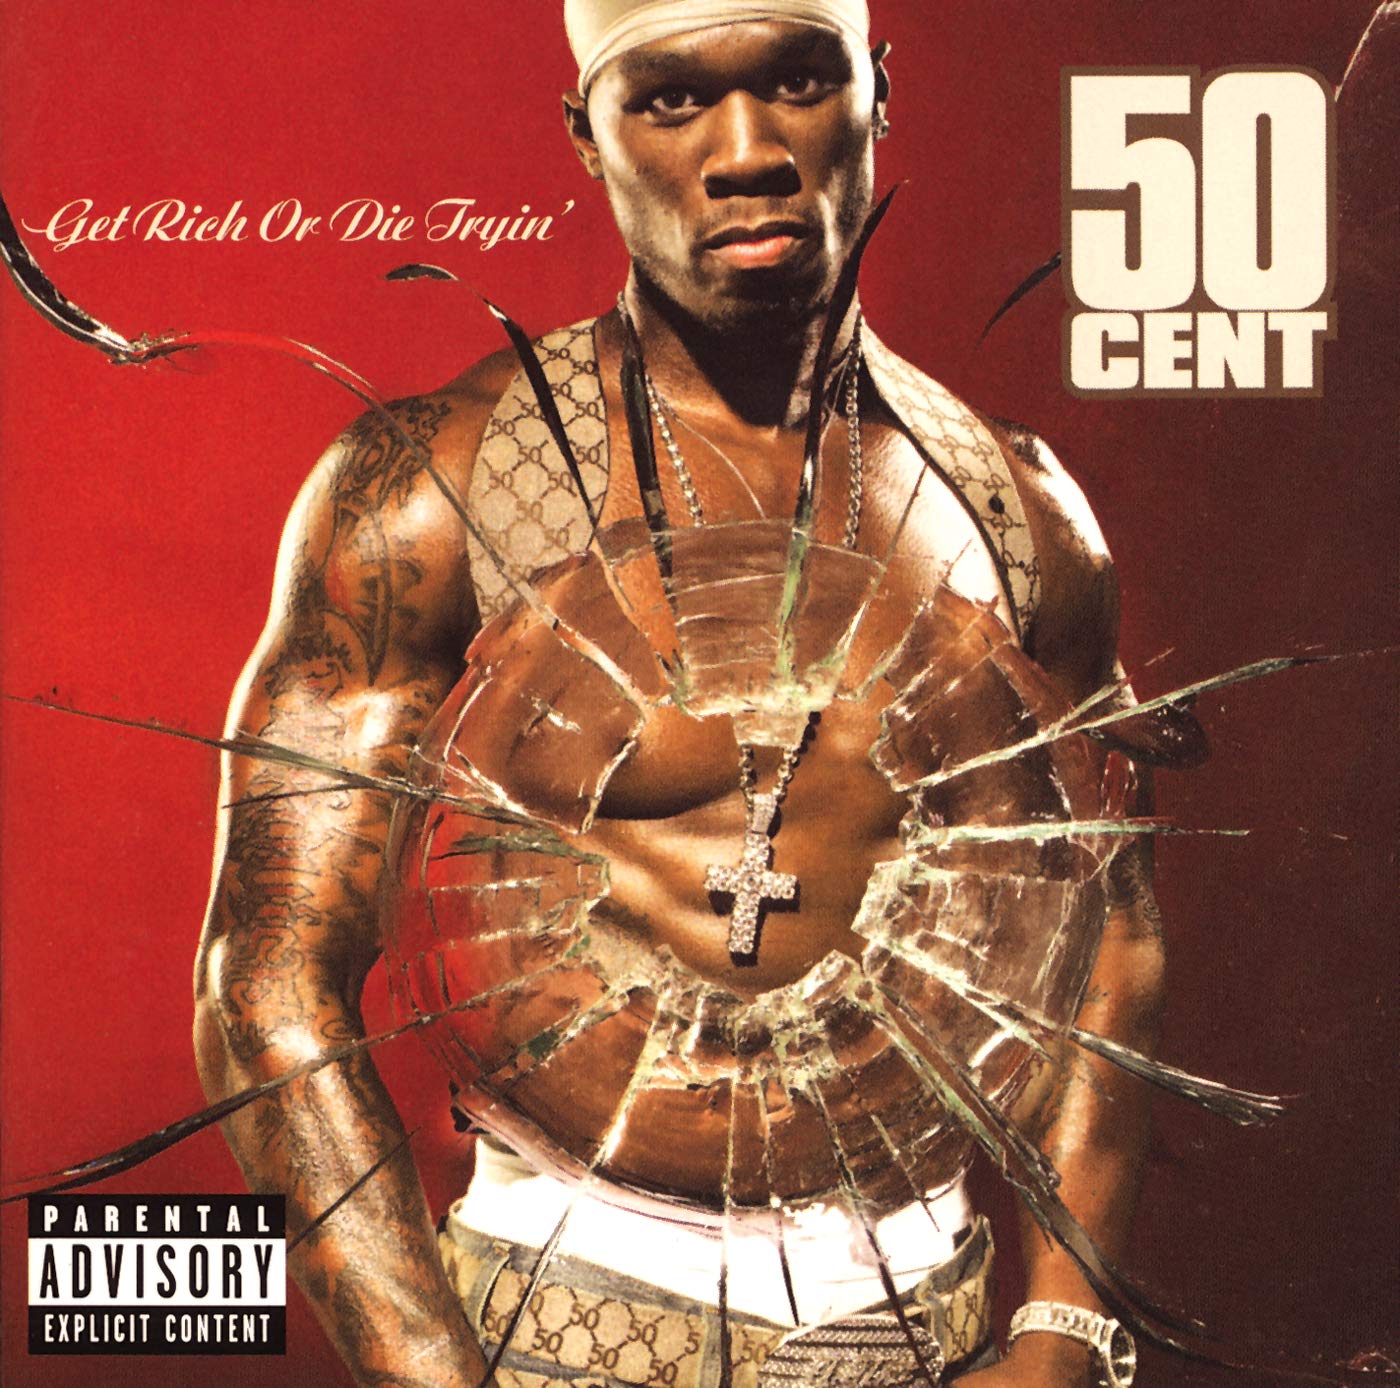 50 Cent - Get Rich Or Die Tryin"